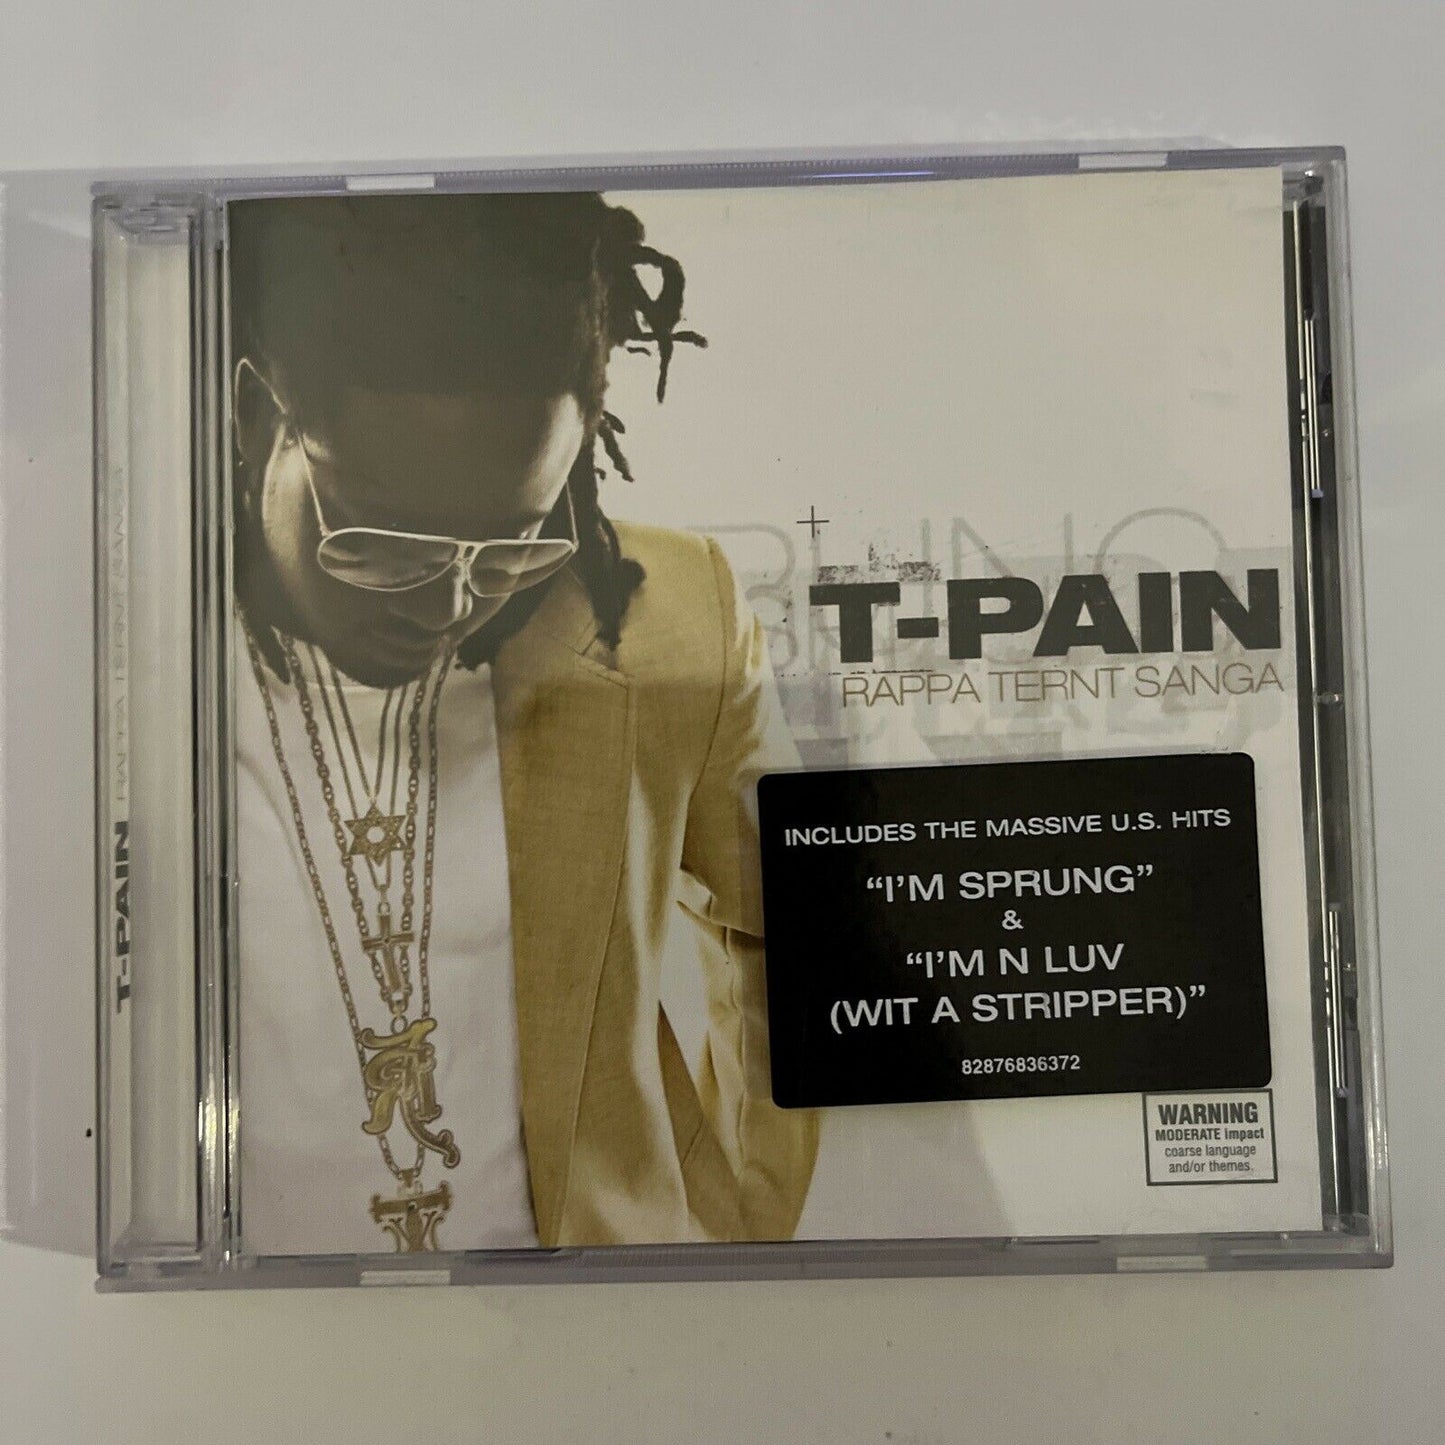 Rappa Ternt Sanga by T-Pain (CD, 2005) Album